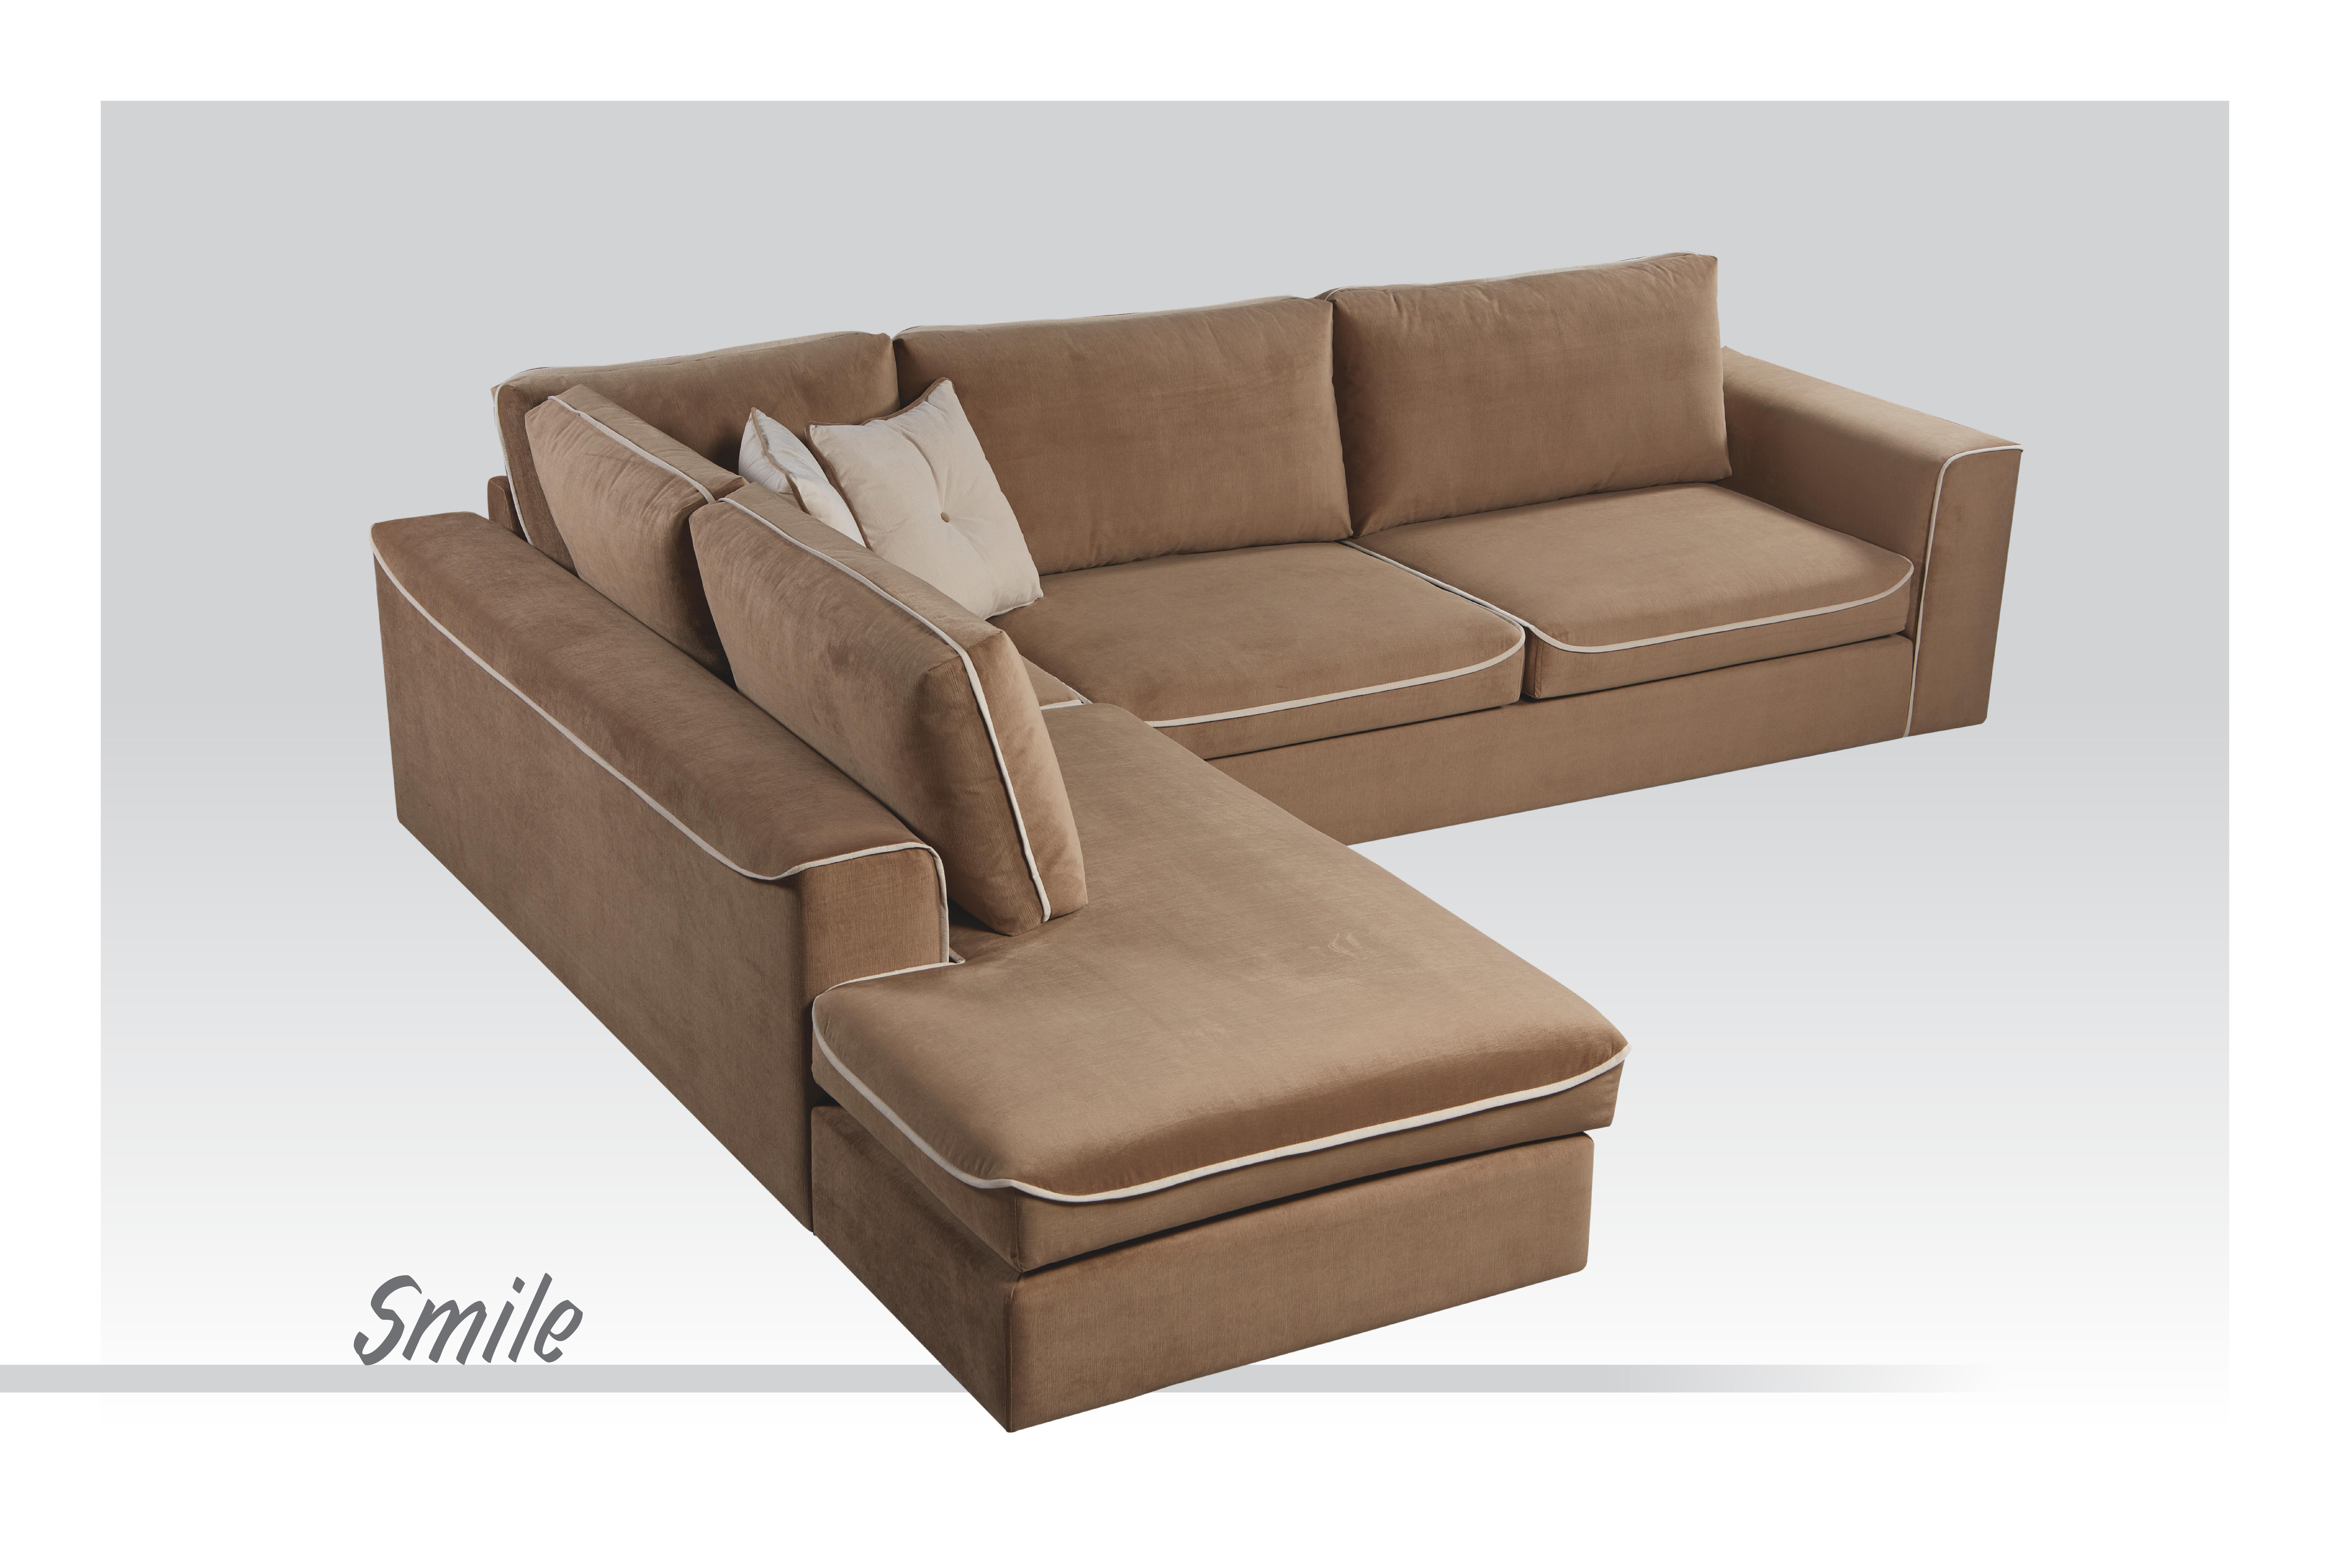 Corner Sofa "Smile"